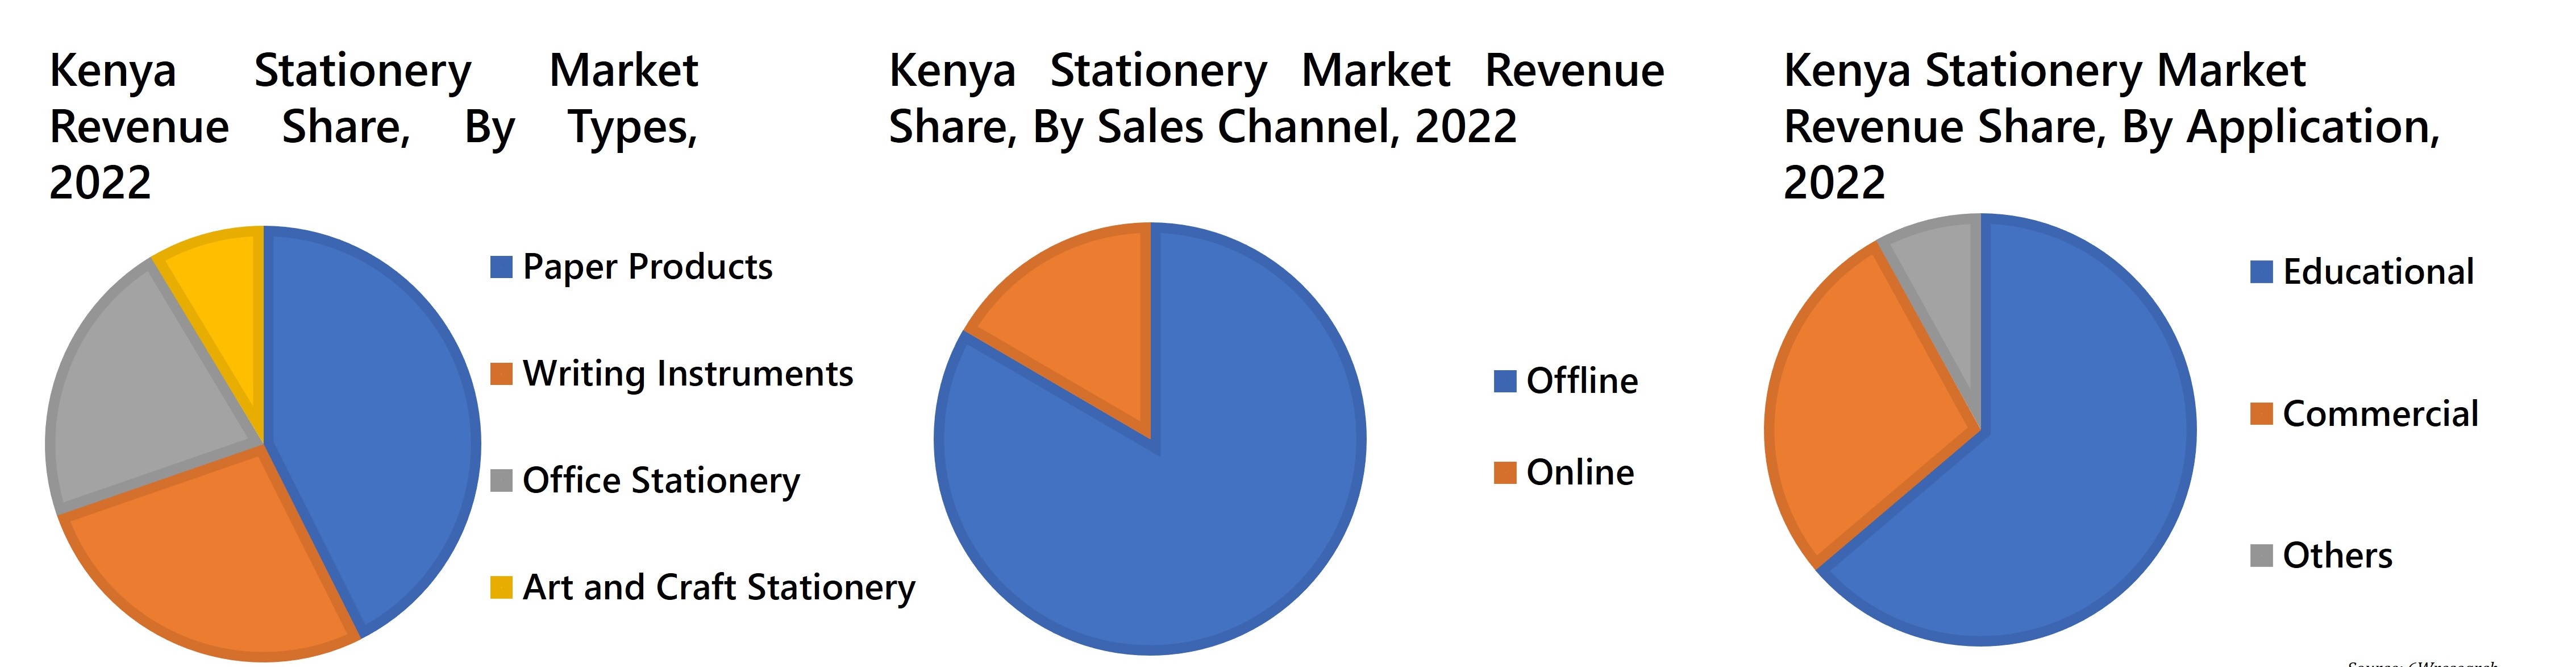 Kenya Stationery Market Revenue Share